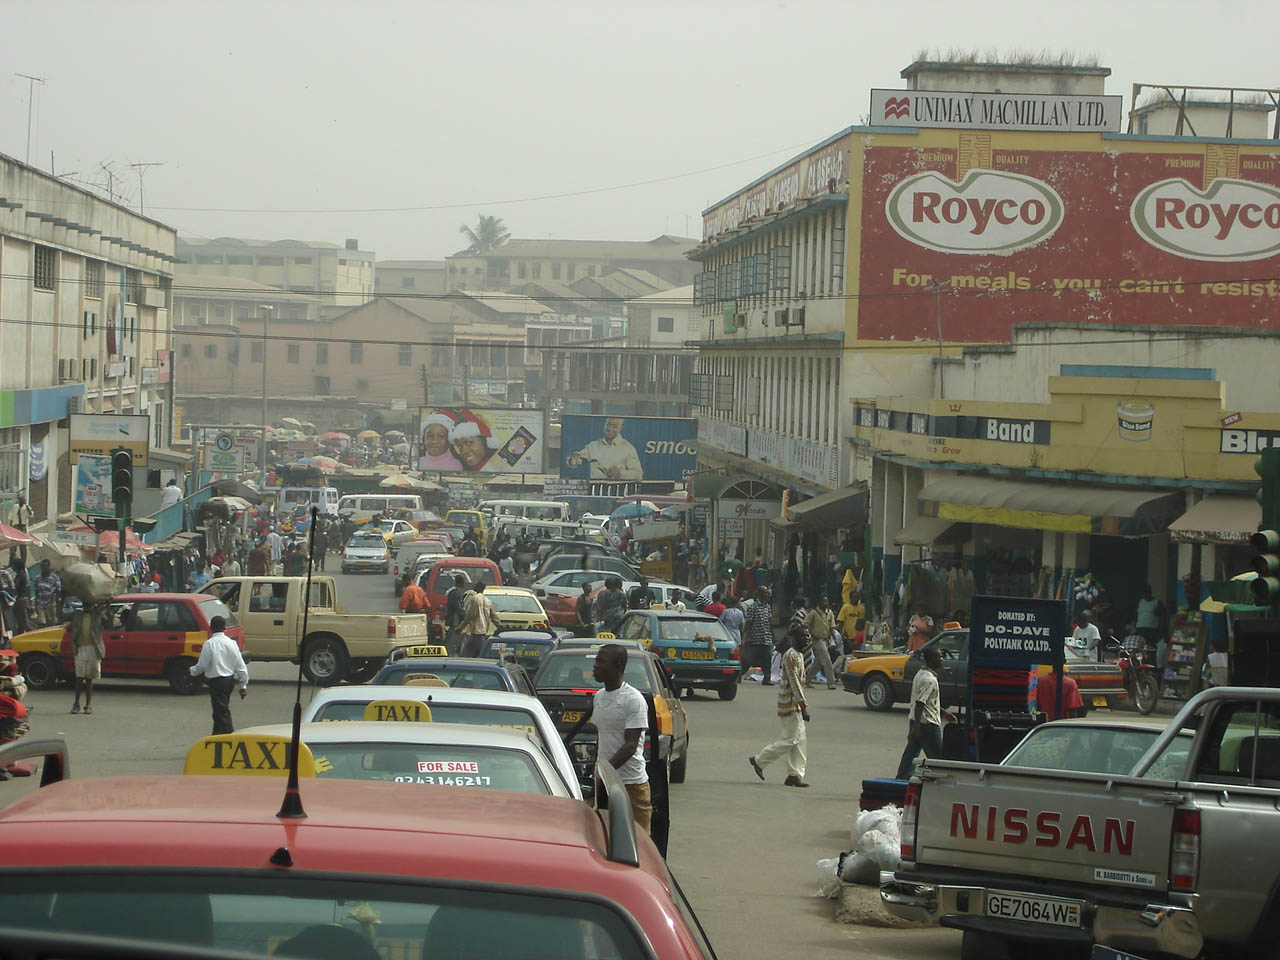 Street in Ghana